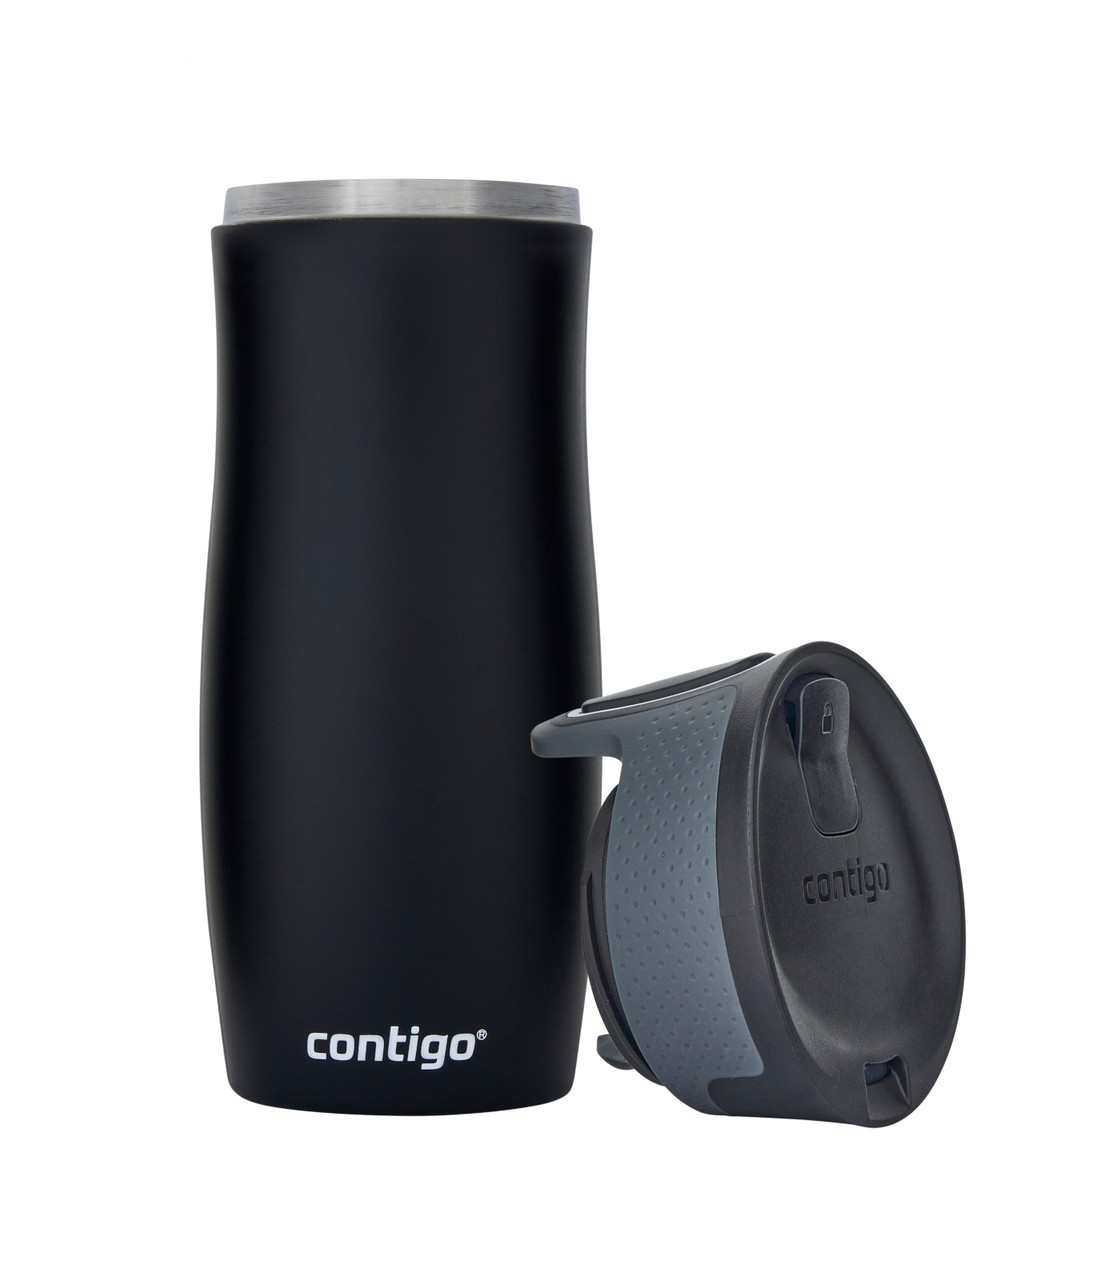 Contigo West Loop Autoseal Travel Mug with Lock (470ml) - Matt